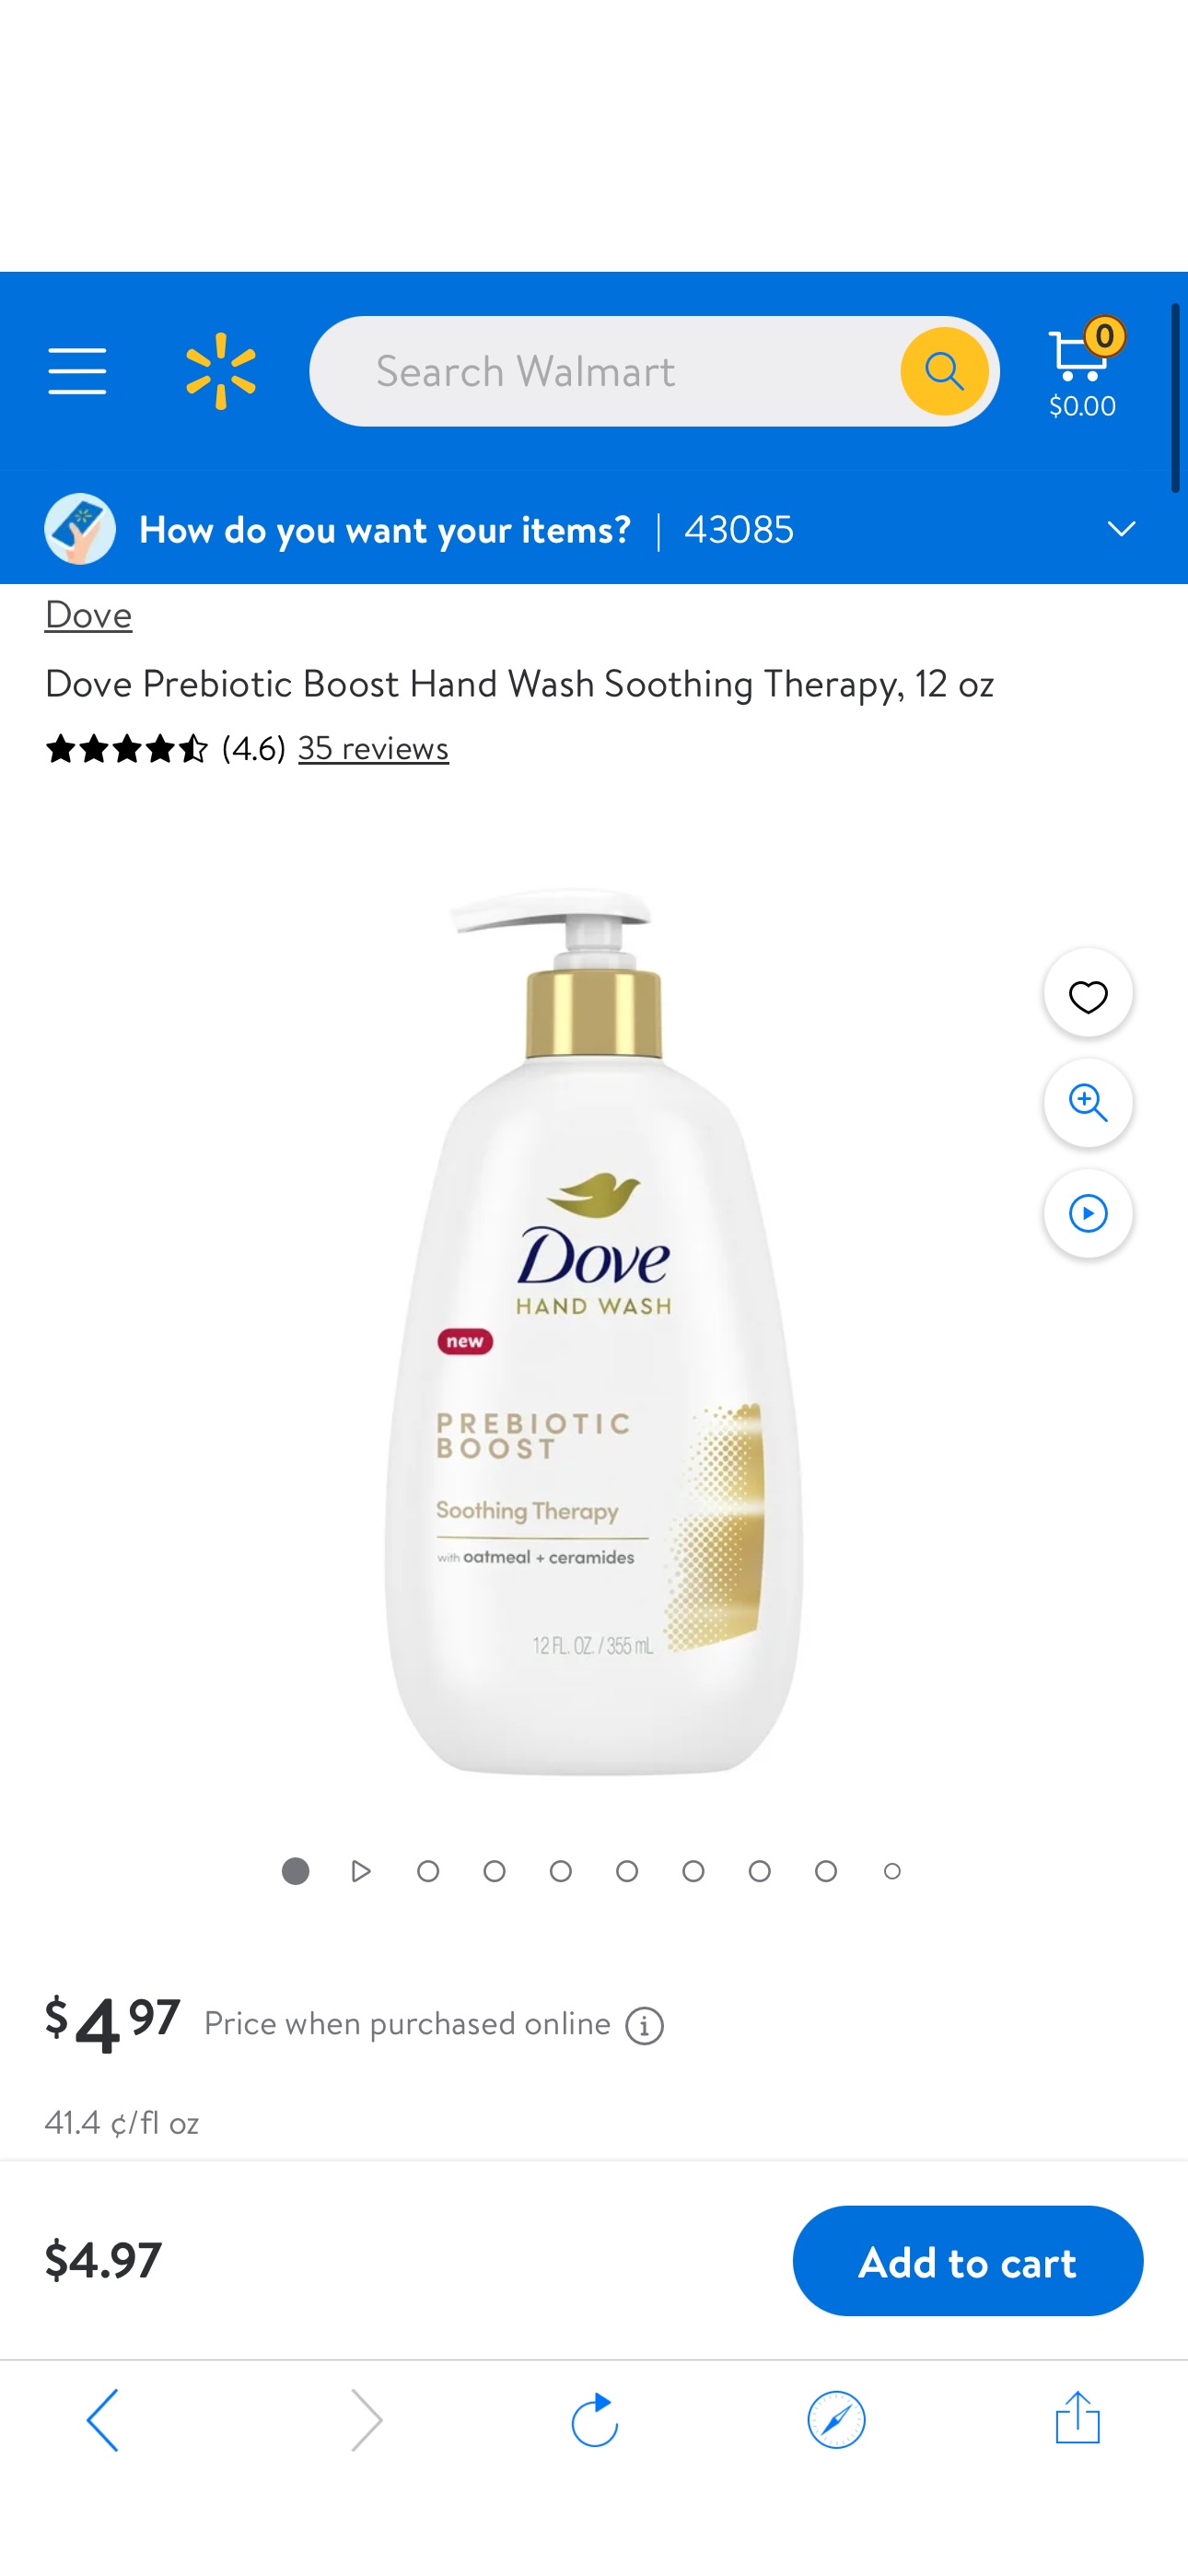 Dove Prebiotic Boost Hand Wash Soothing Therapy, 12 oz - Walmart.com 退现$3 Walmart cash